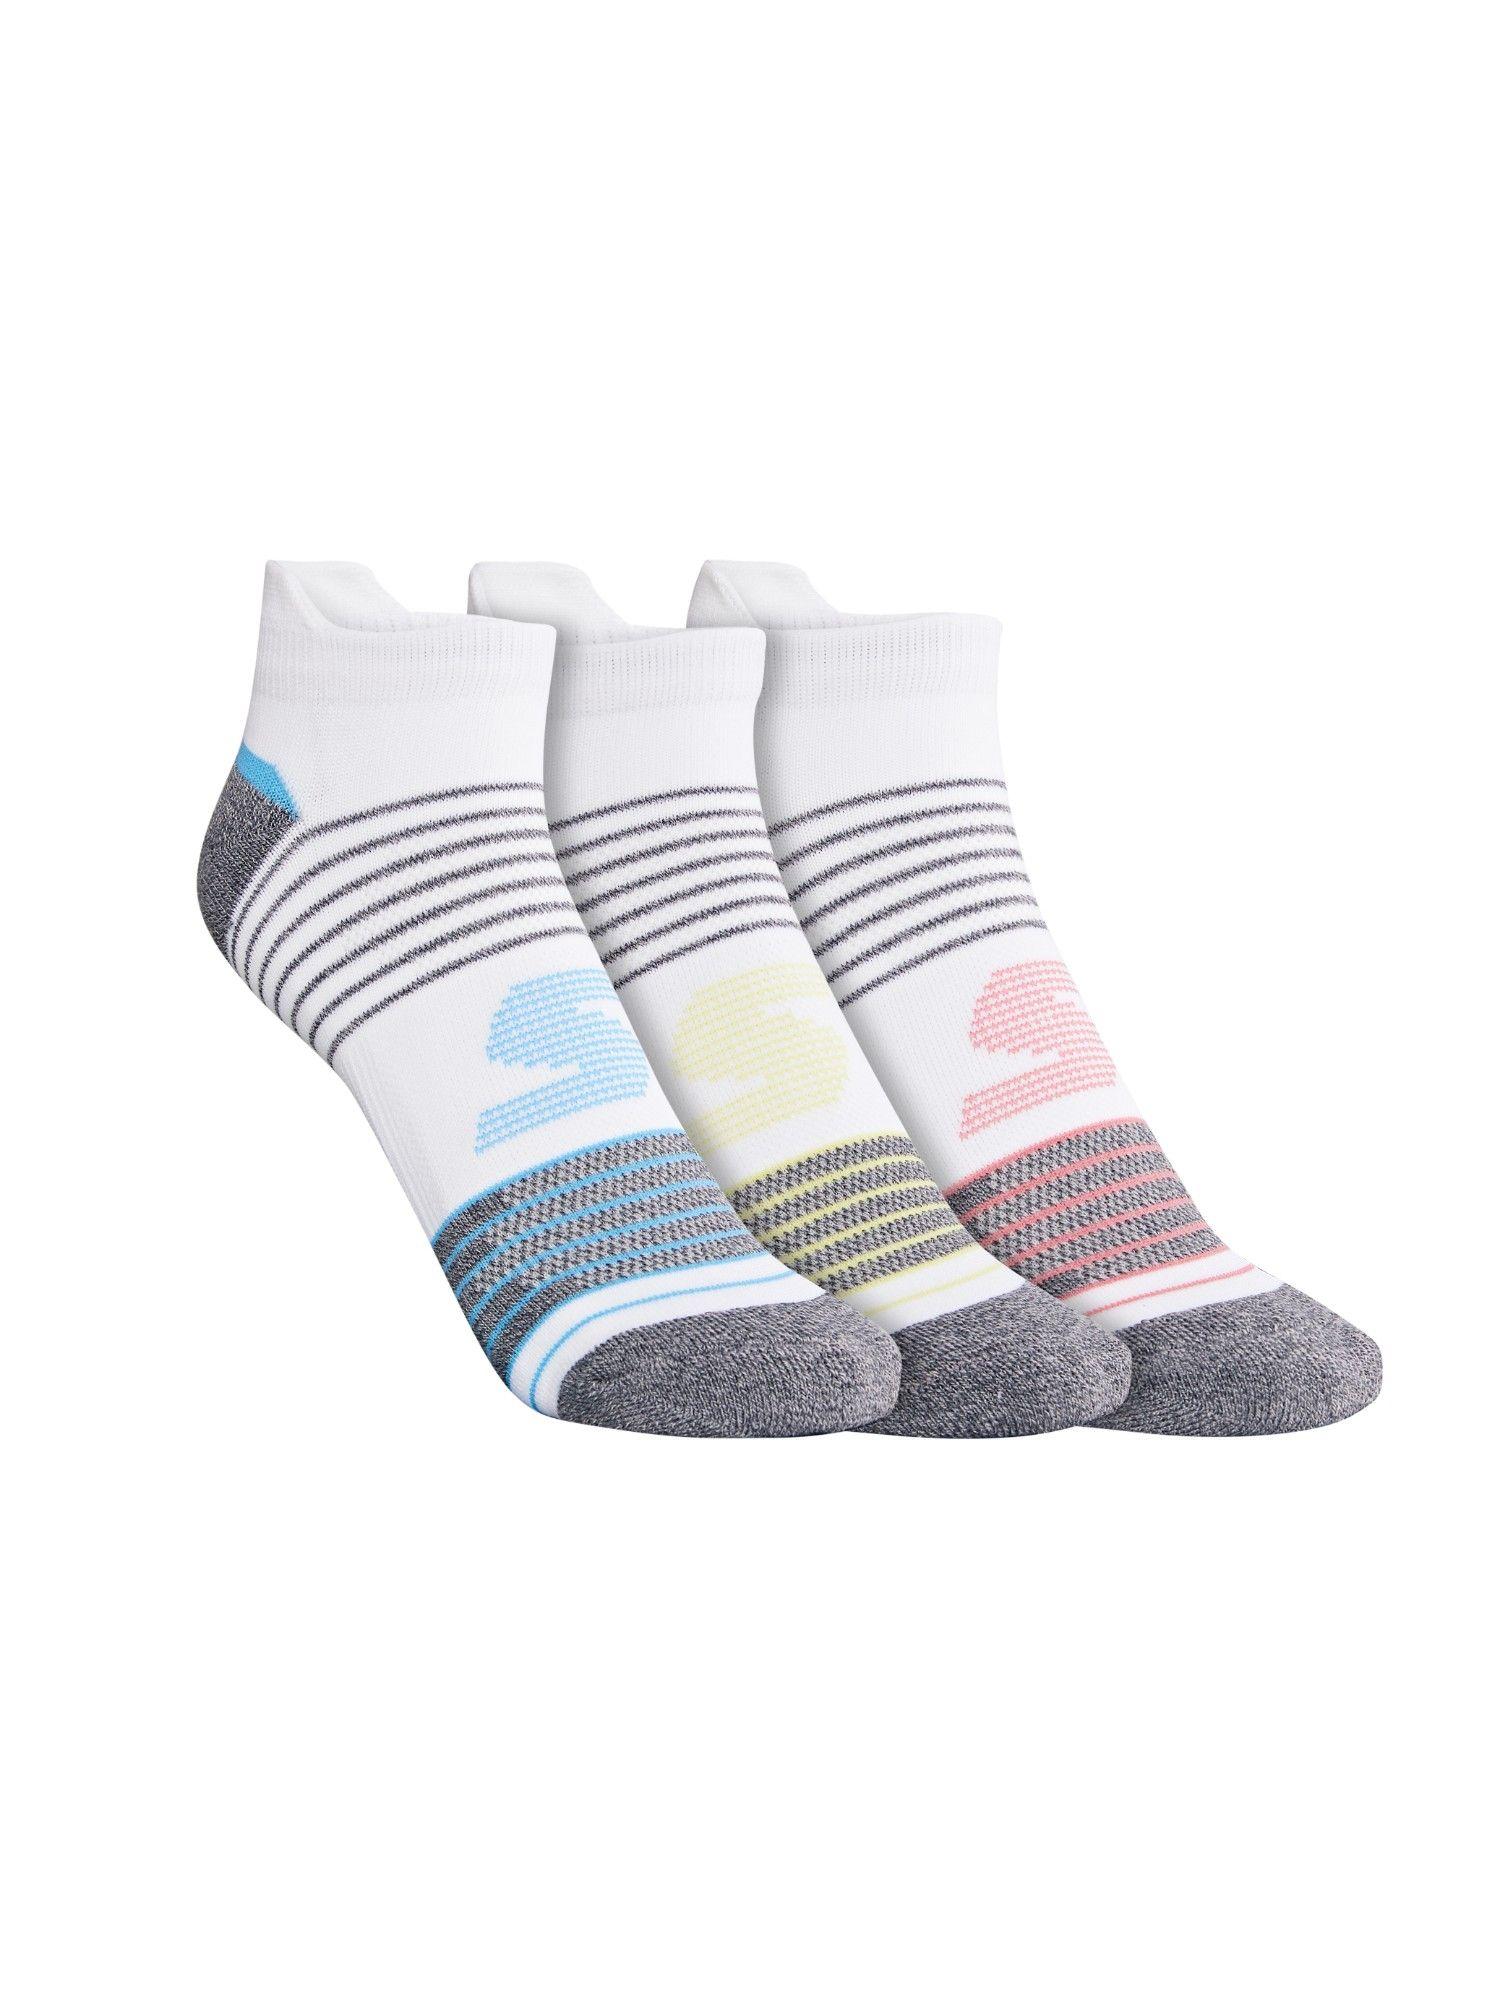 3 peice unisex half cushion lowcut multi-color socks